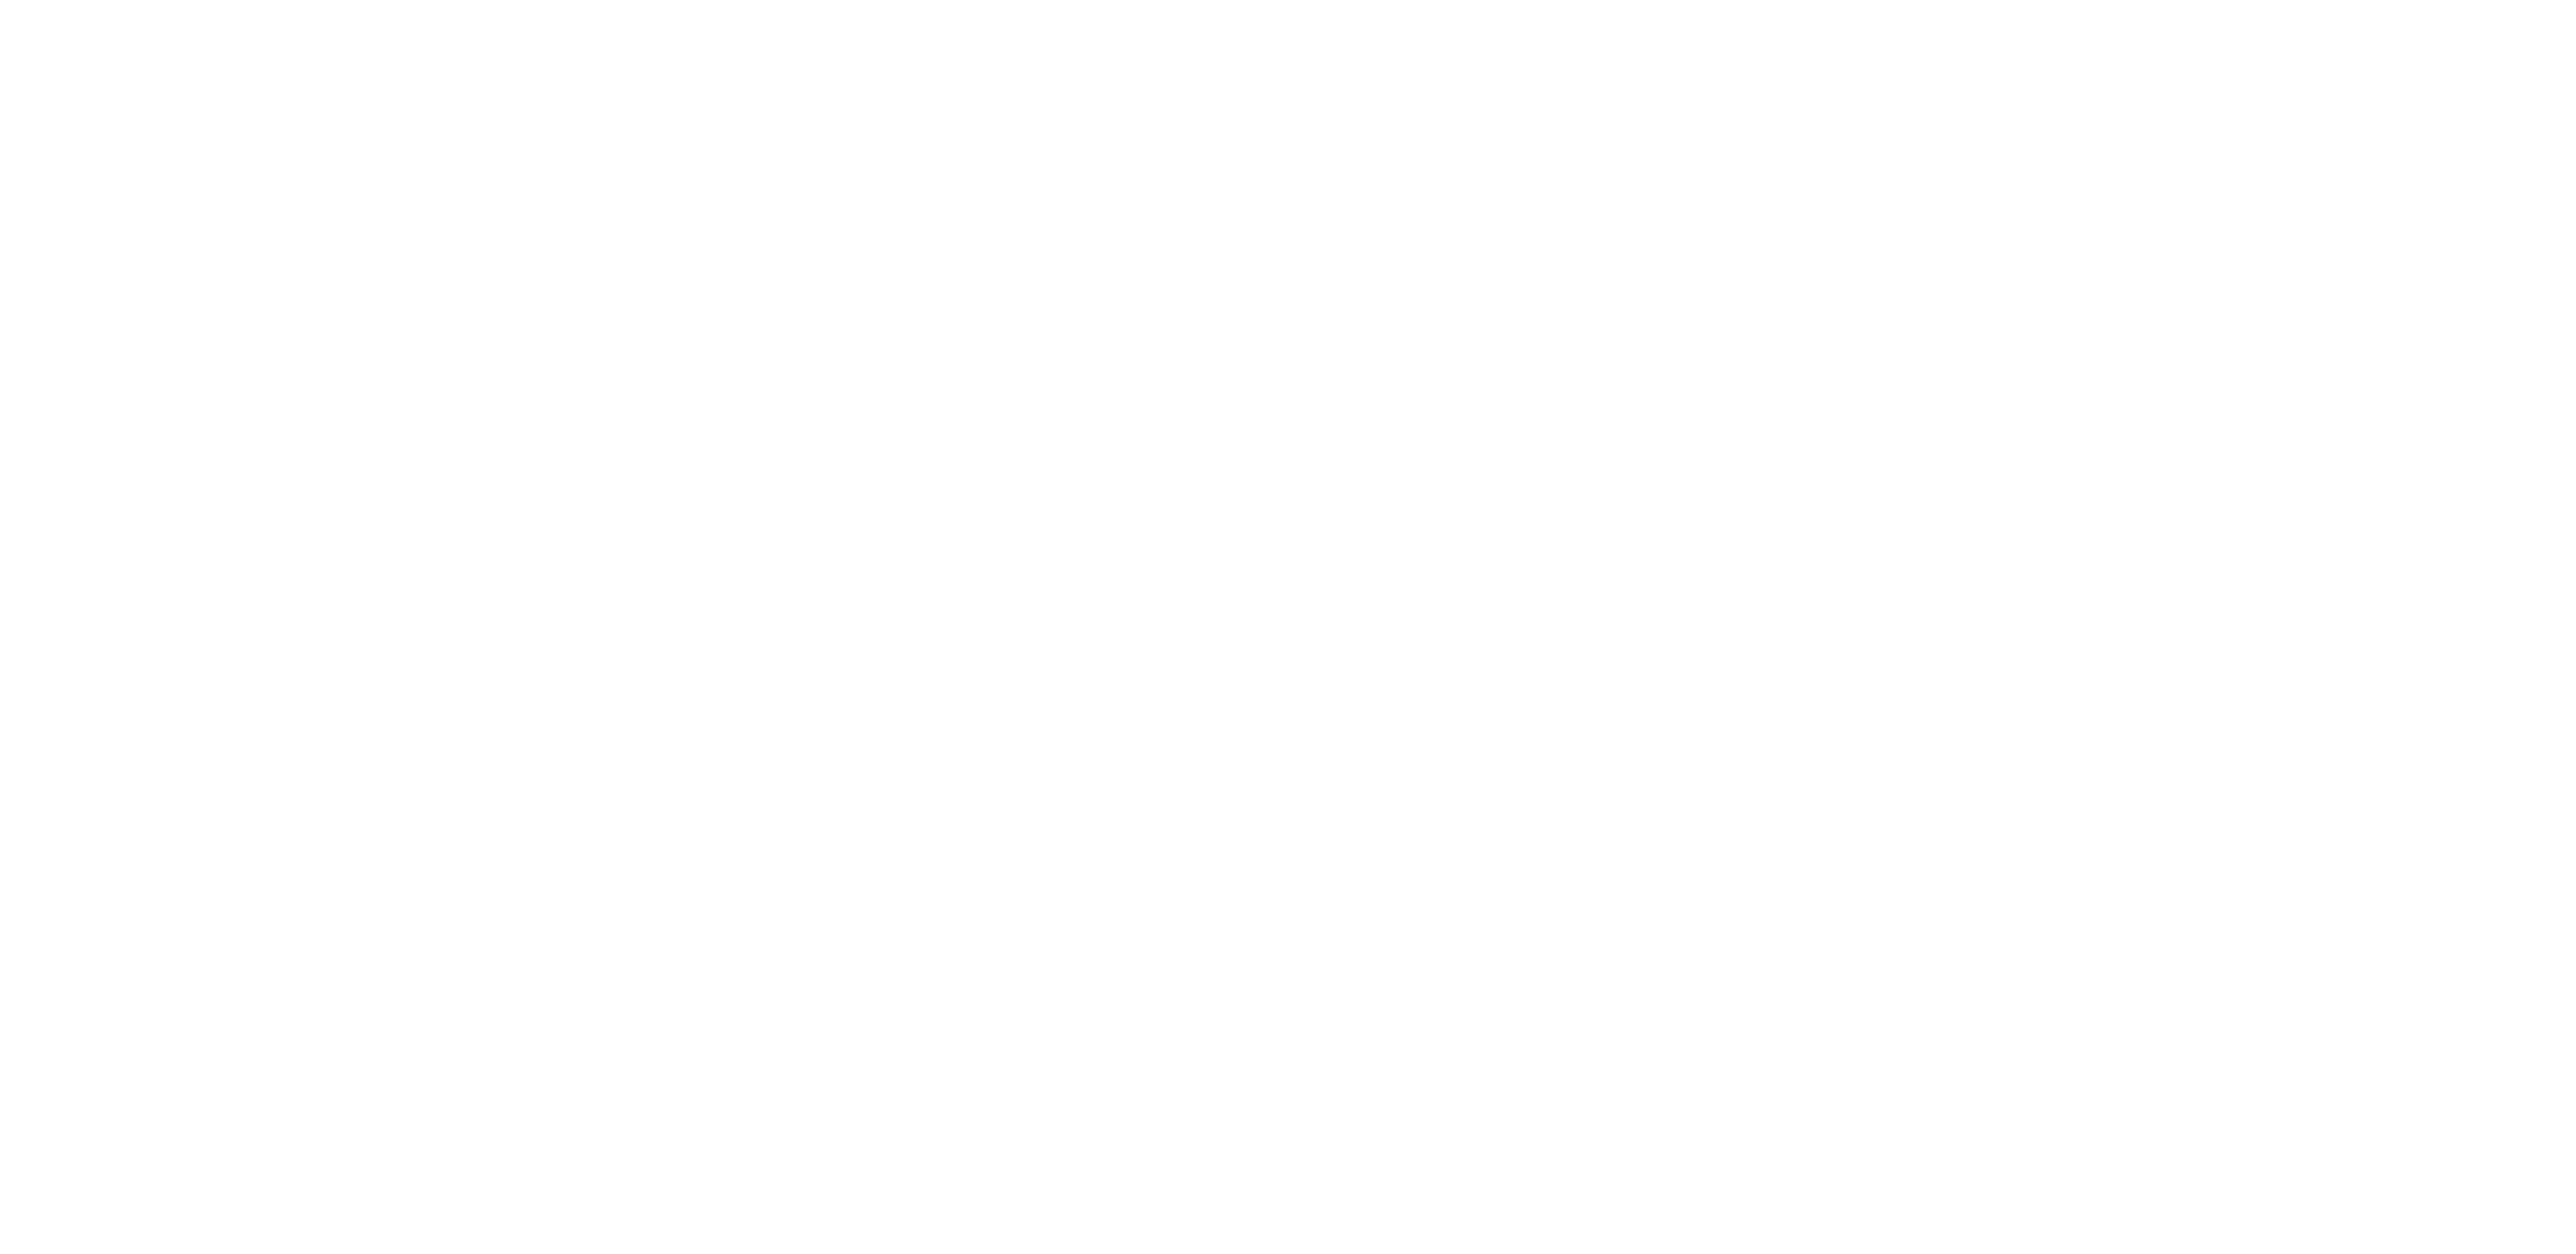 Visit Milledgeville Logo